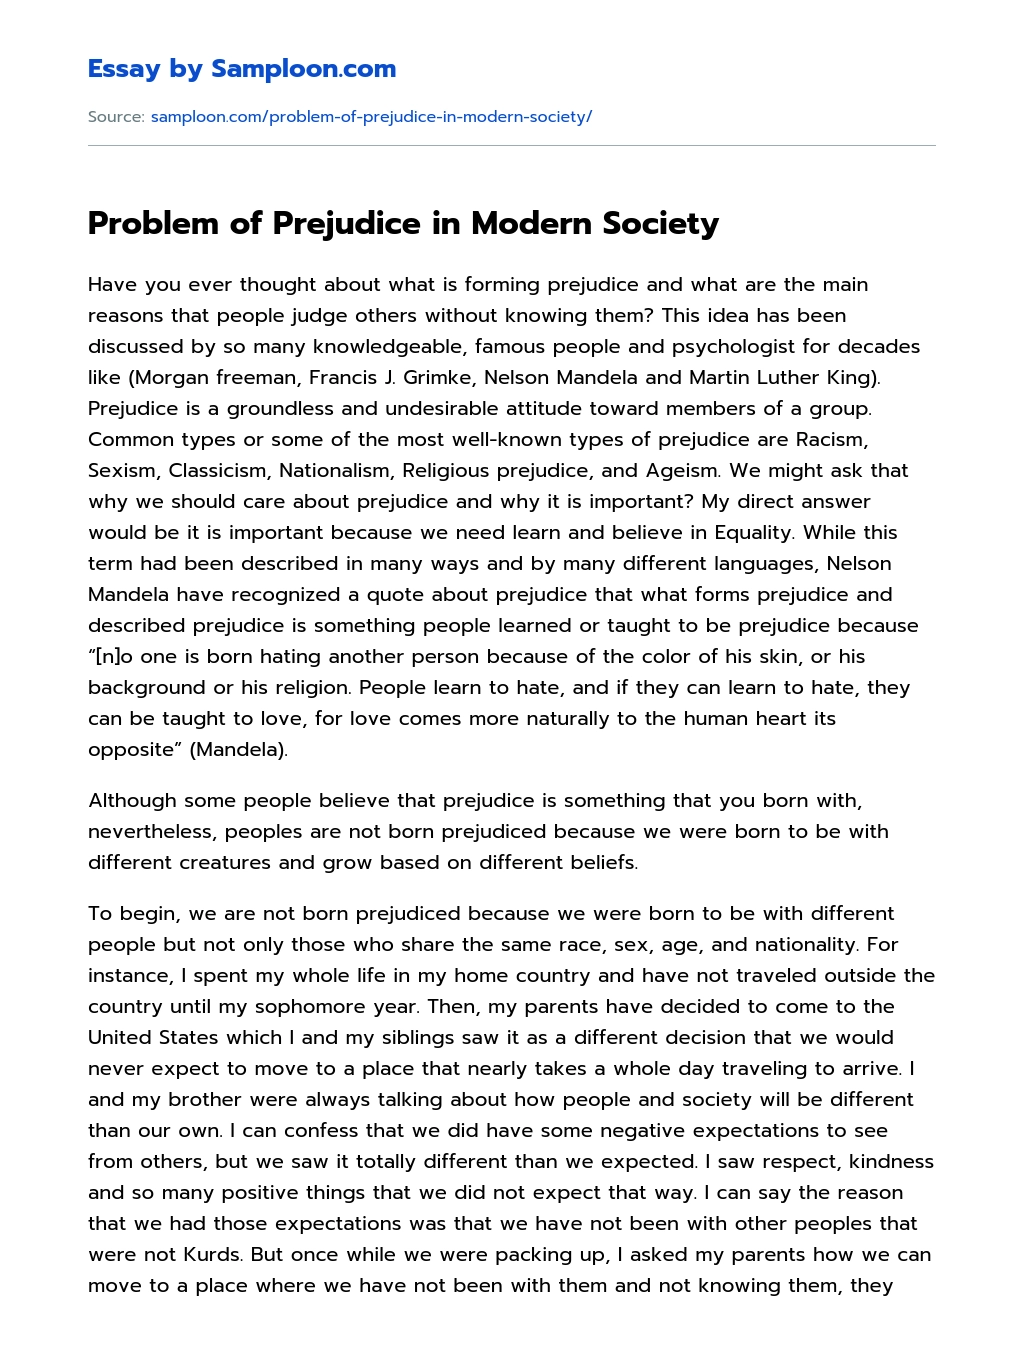 Problem of Prejudice in Modern Society essay